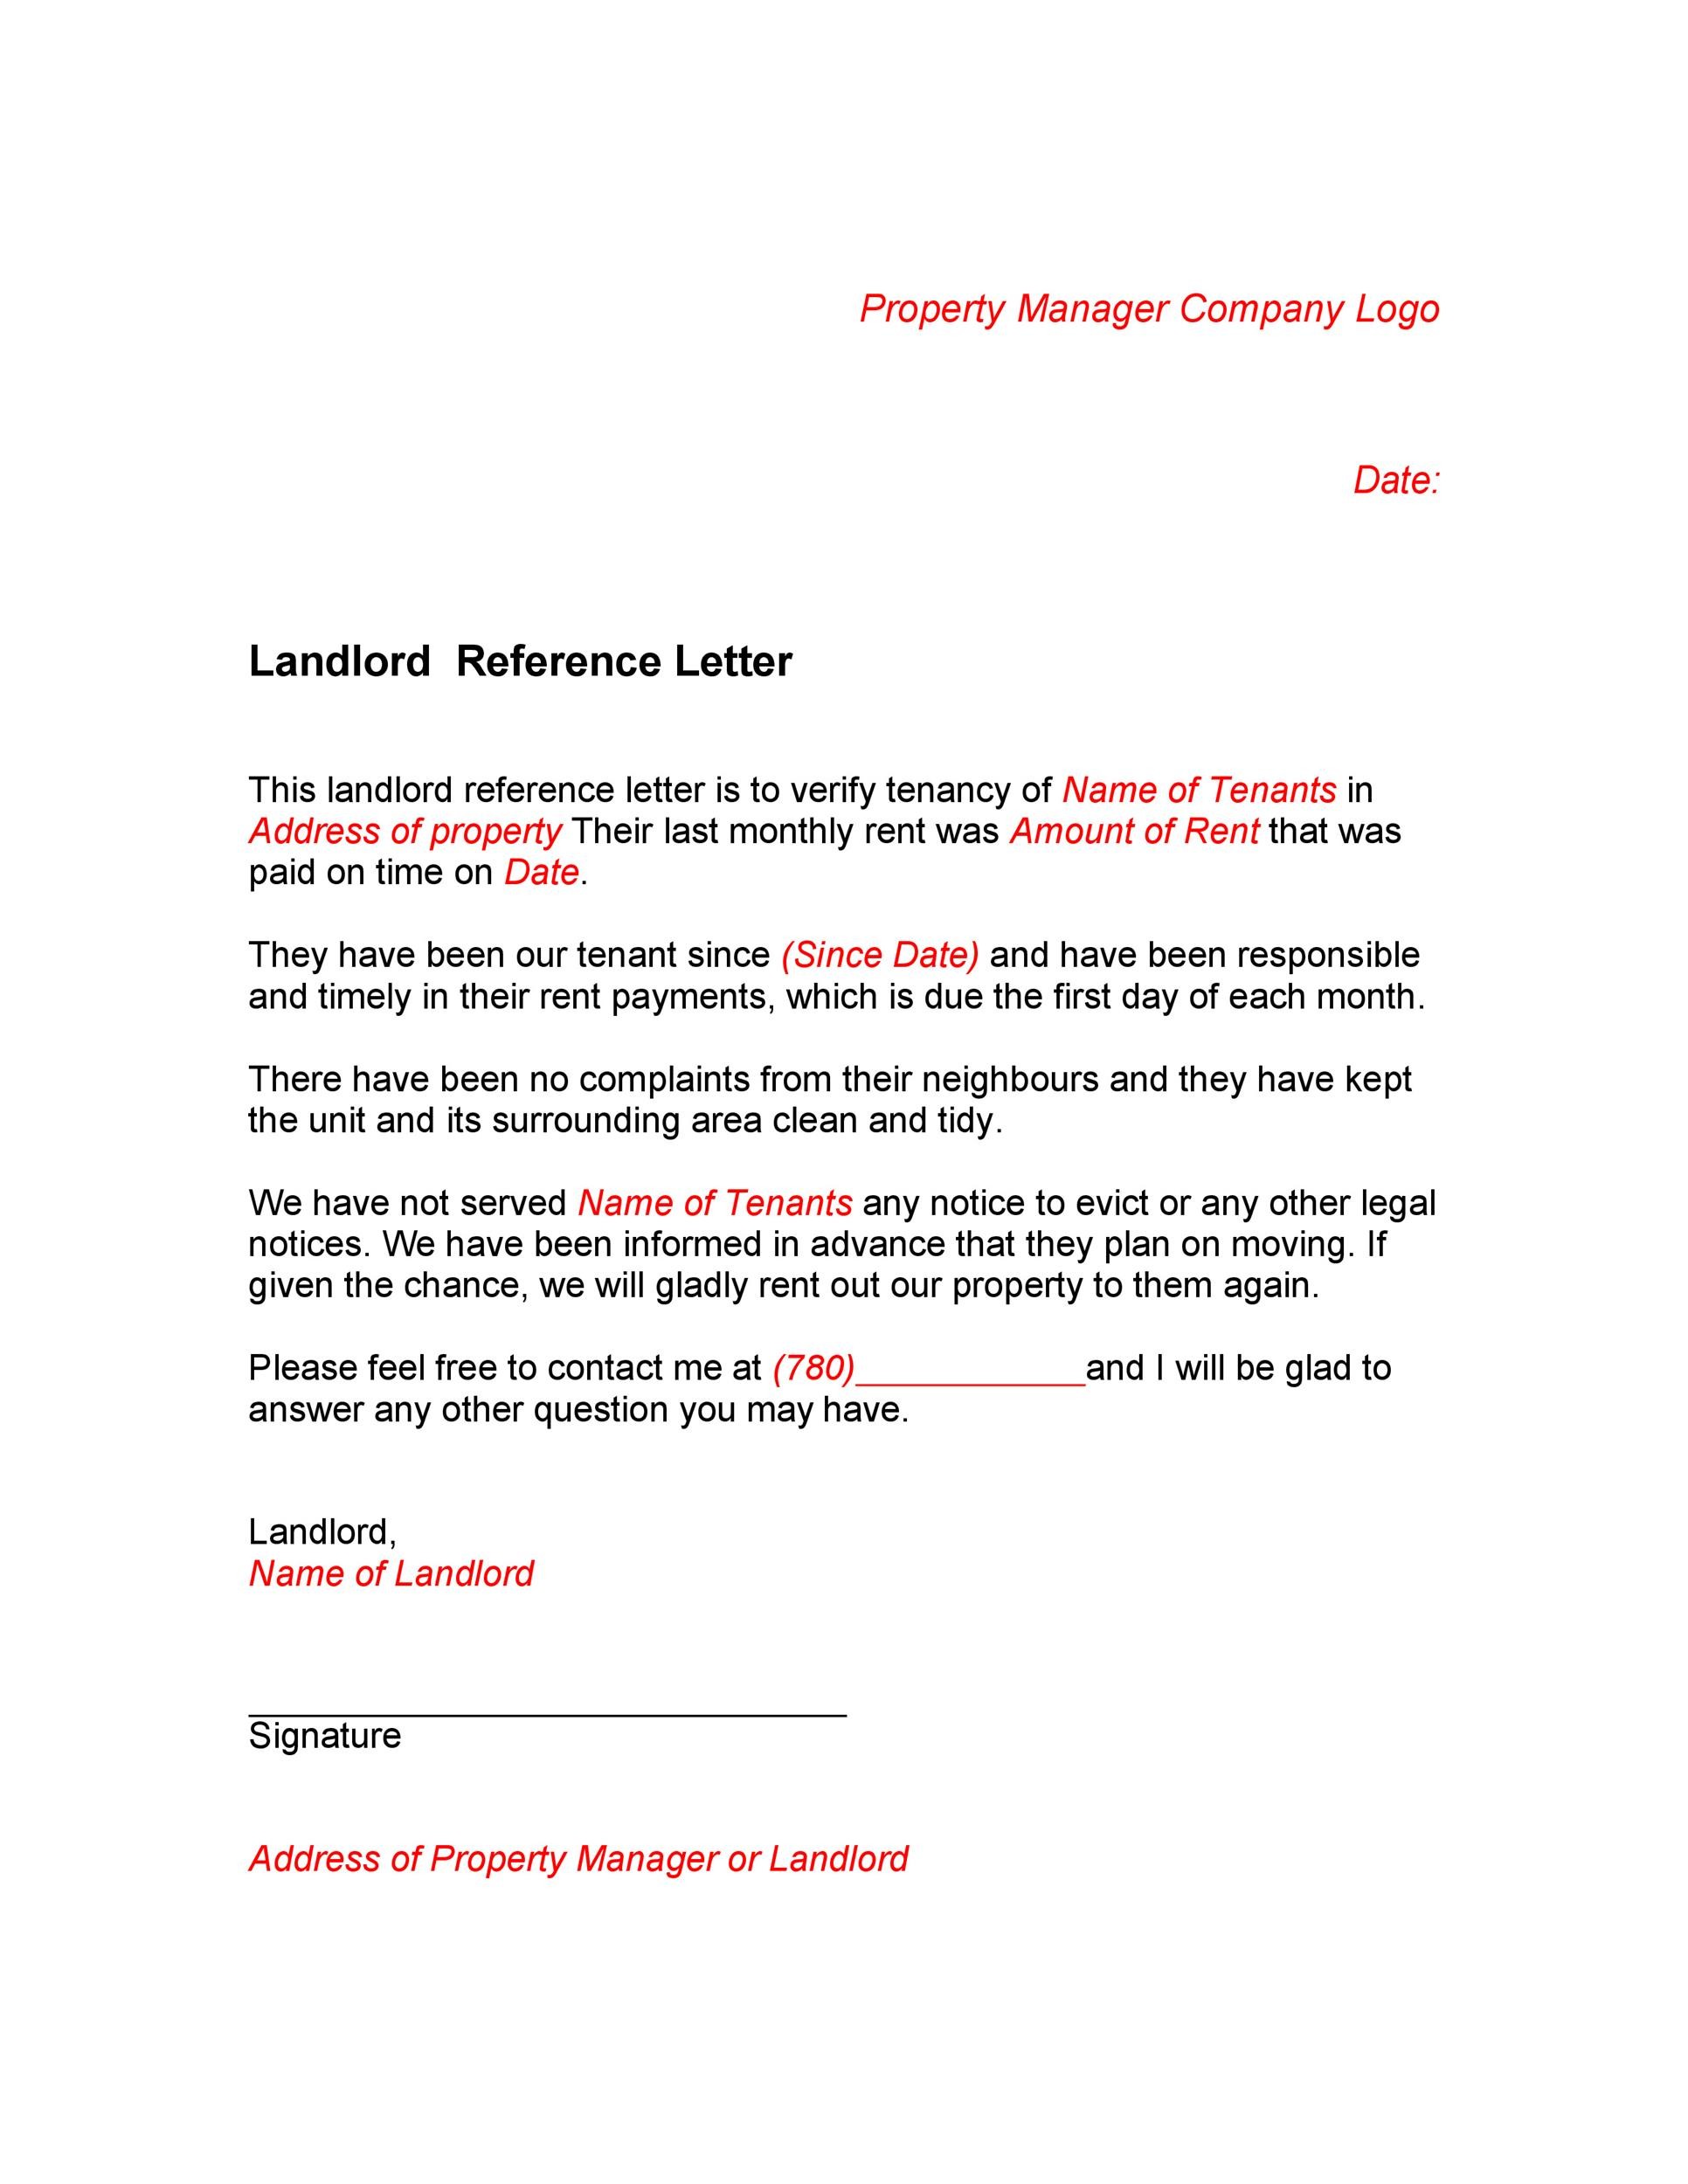 Sample Letter to Landlord